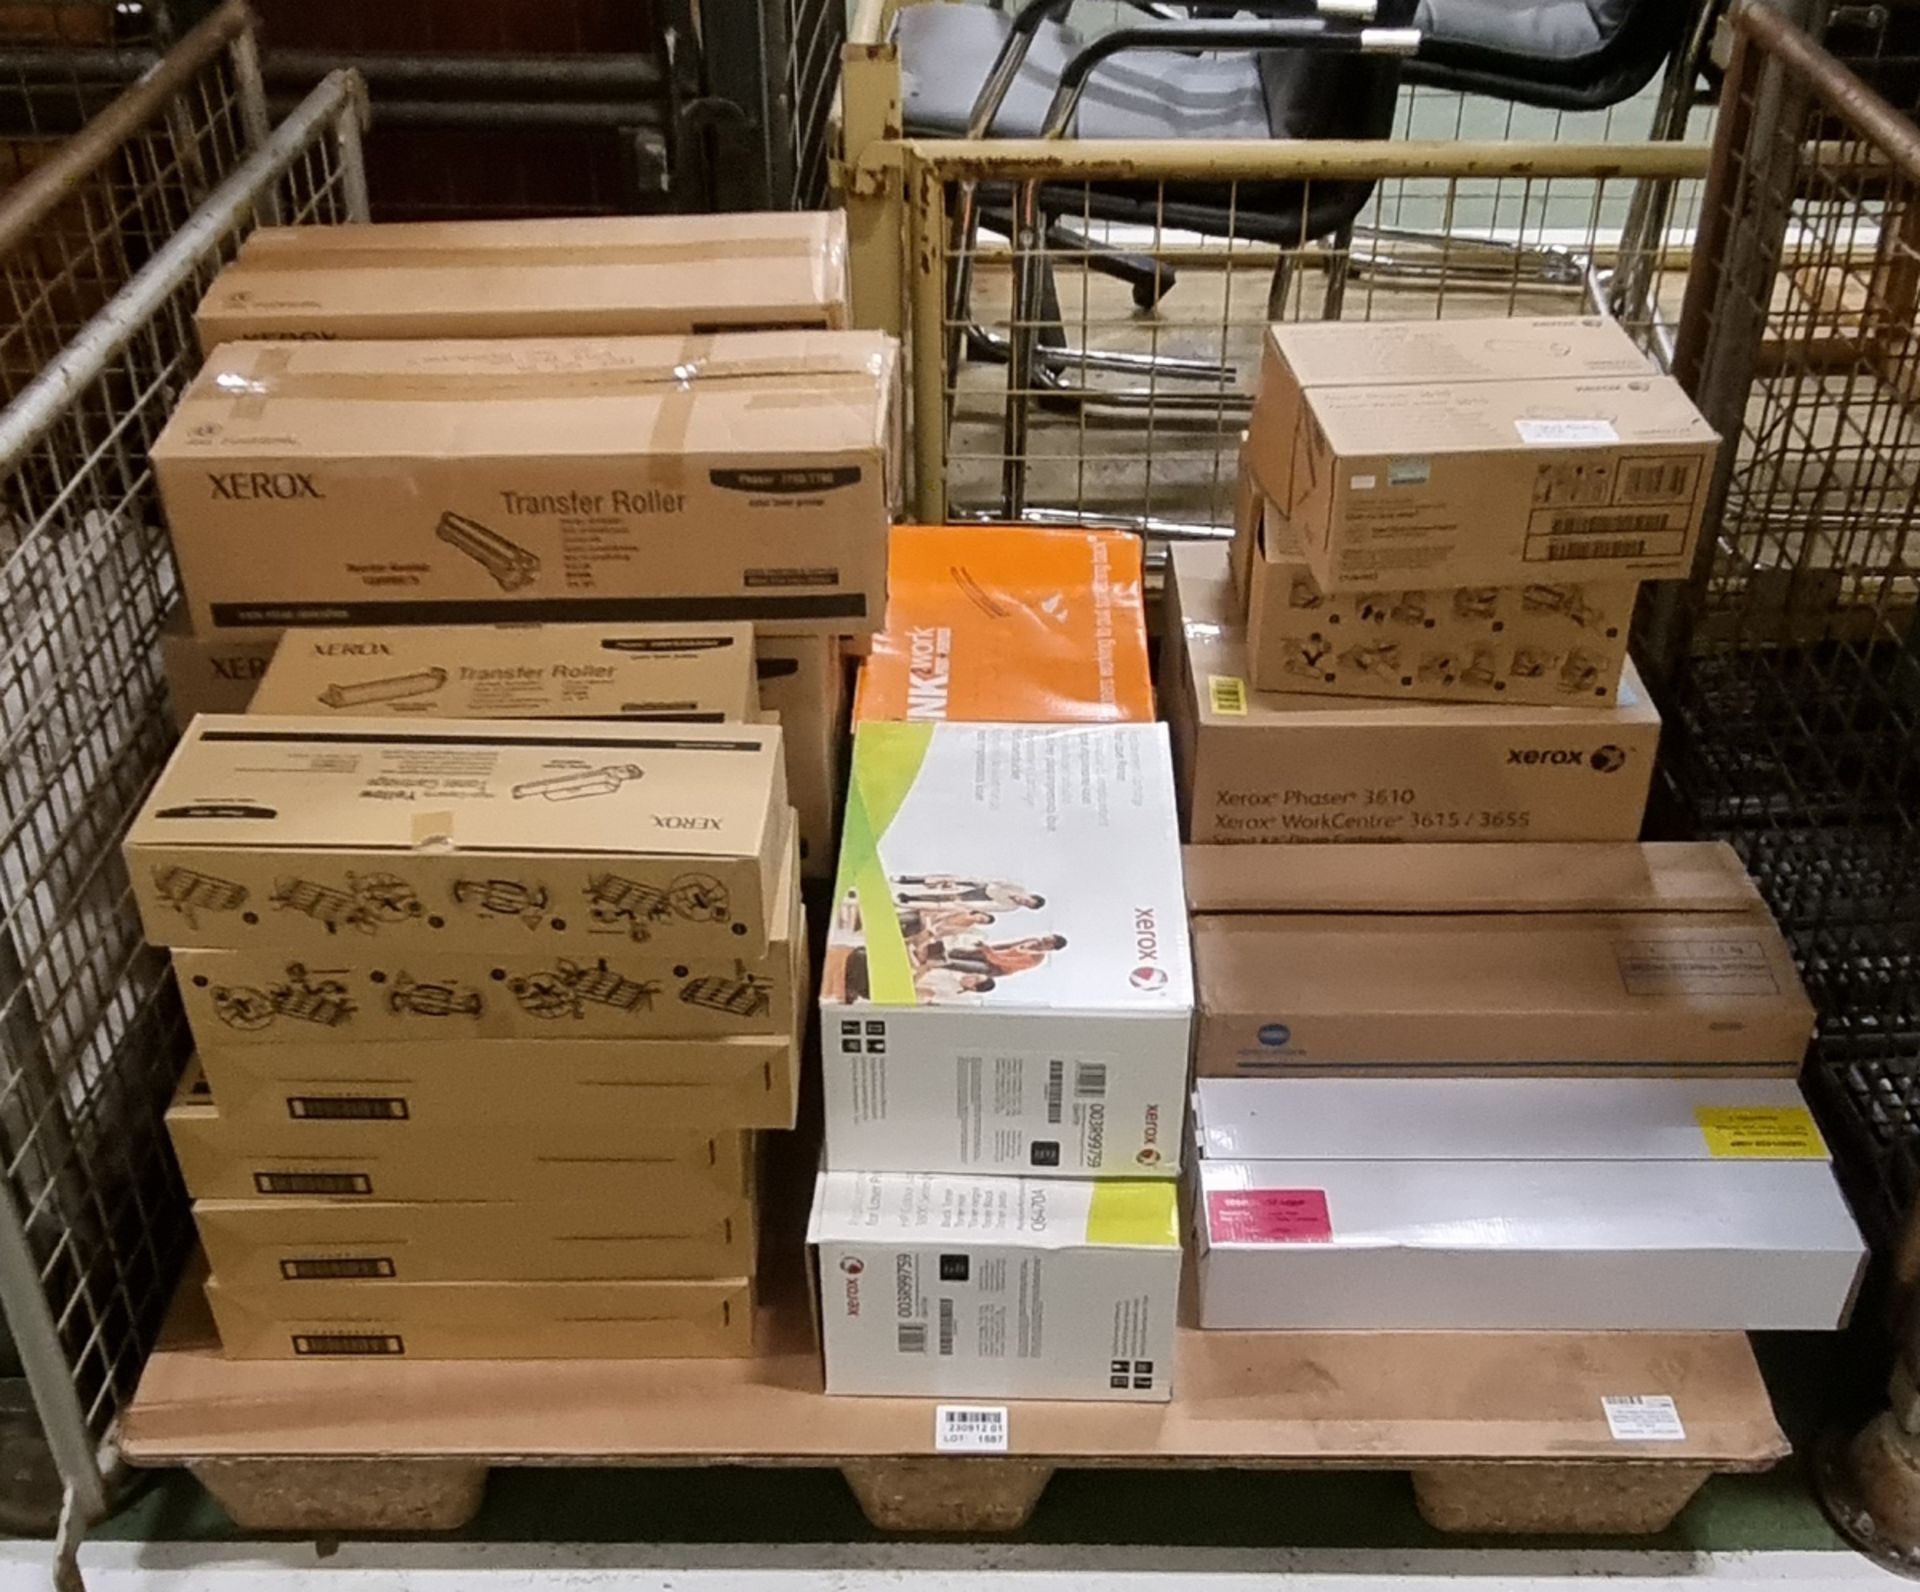 28x boxes of toners and transfer rollers - Xerox 6360, Xerox 7750, Xerox 3610 and HP 3600